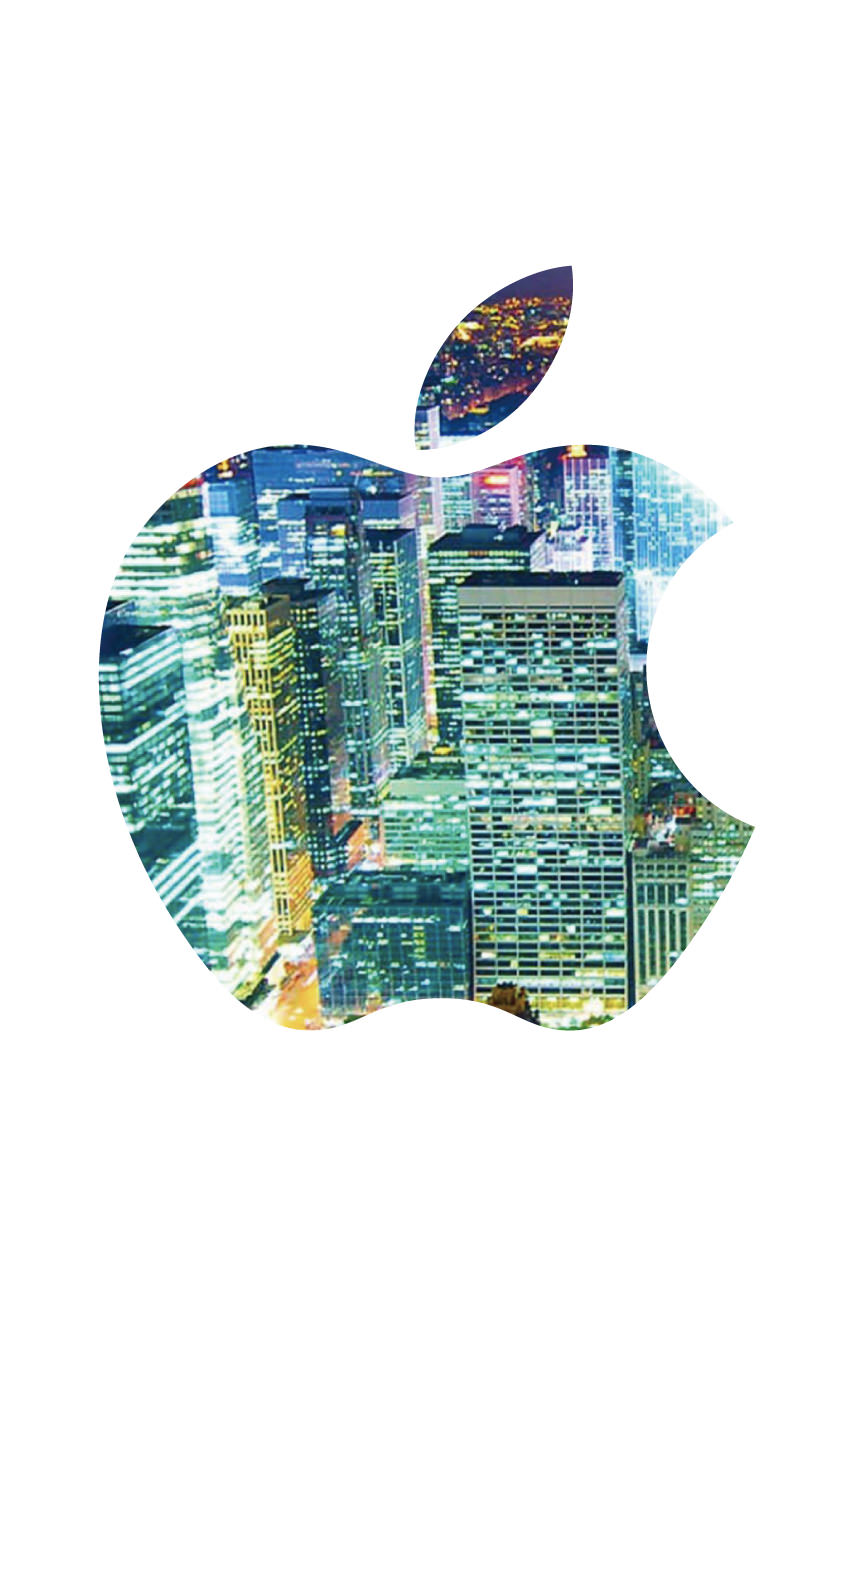 iPhone 7 Wallpaper